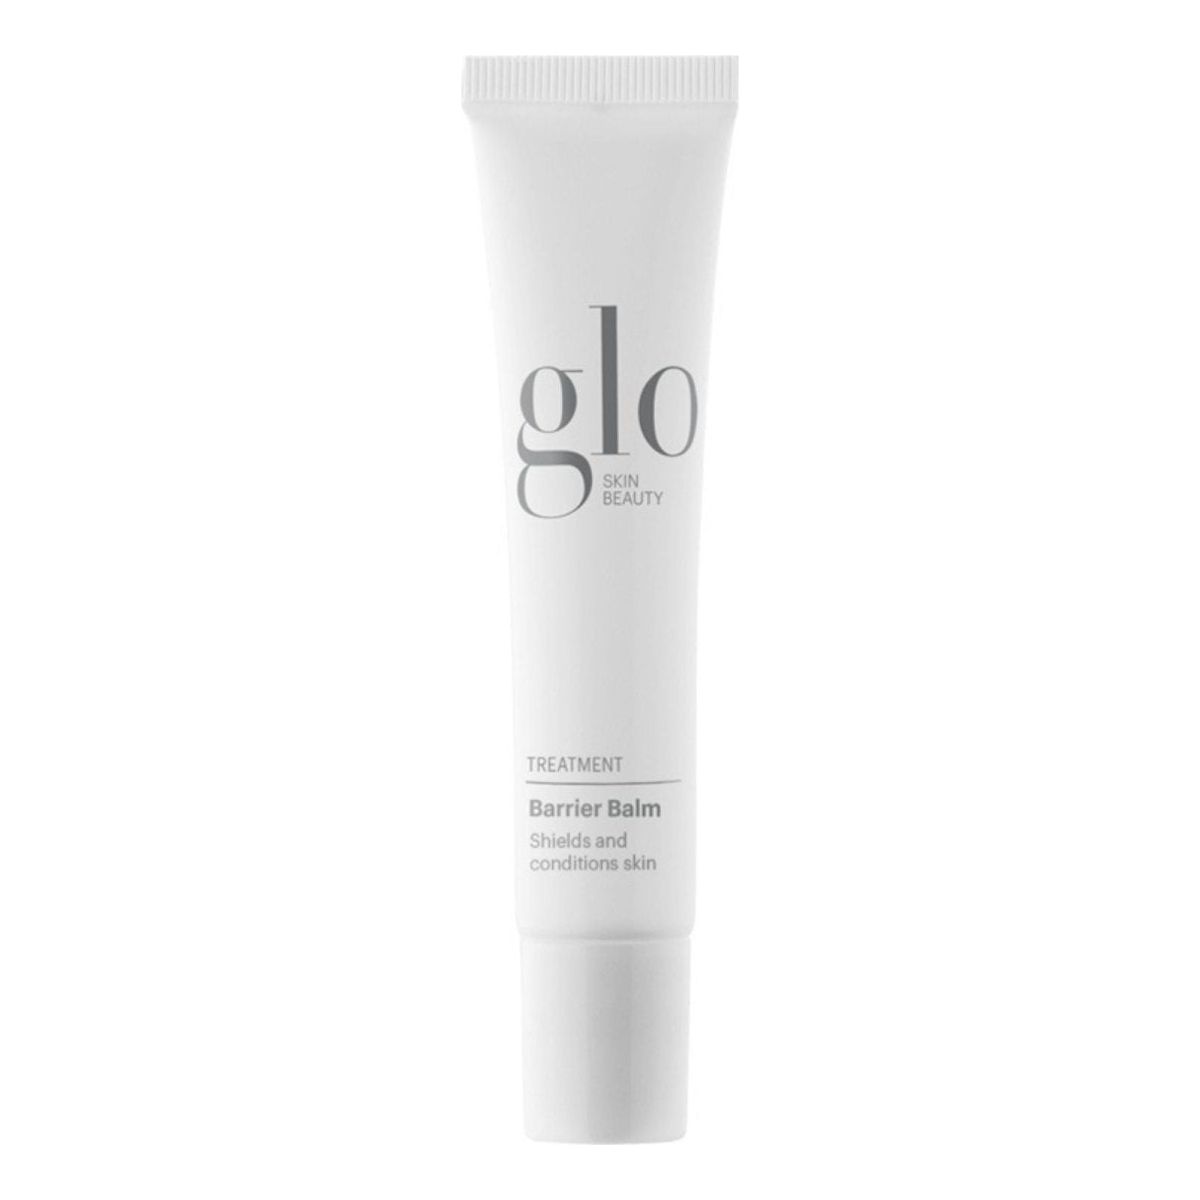 Glo Skin Beauty | Barrier Balm | 15ml - DG International Ventures Limited